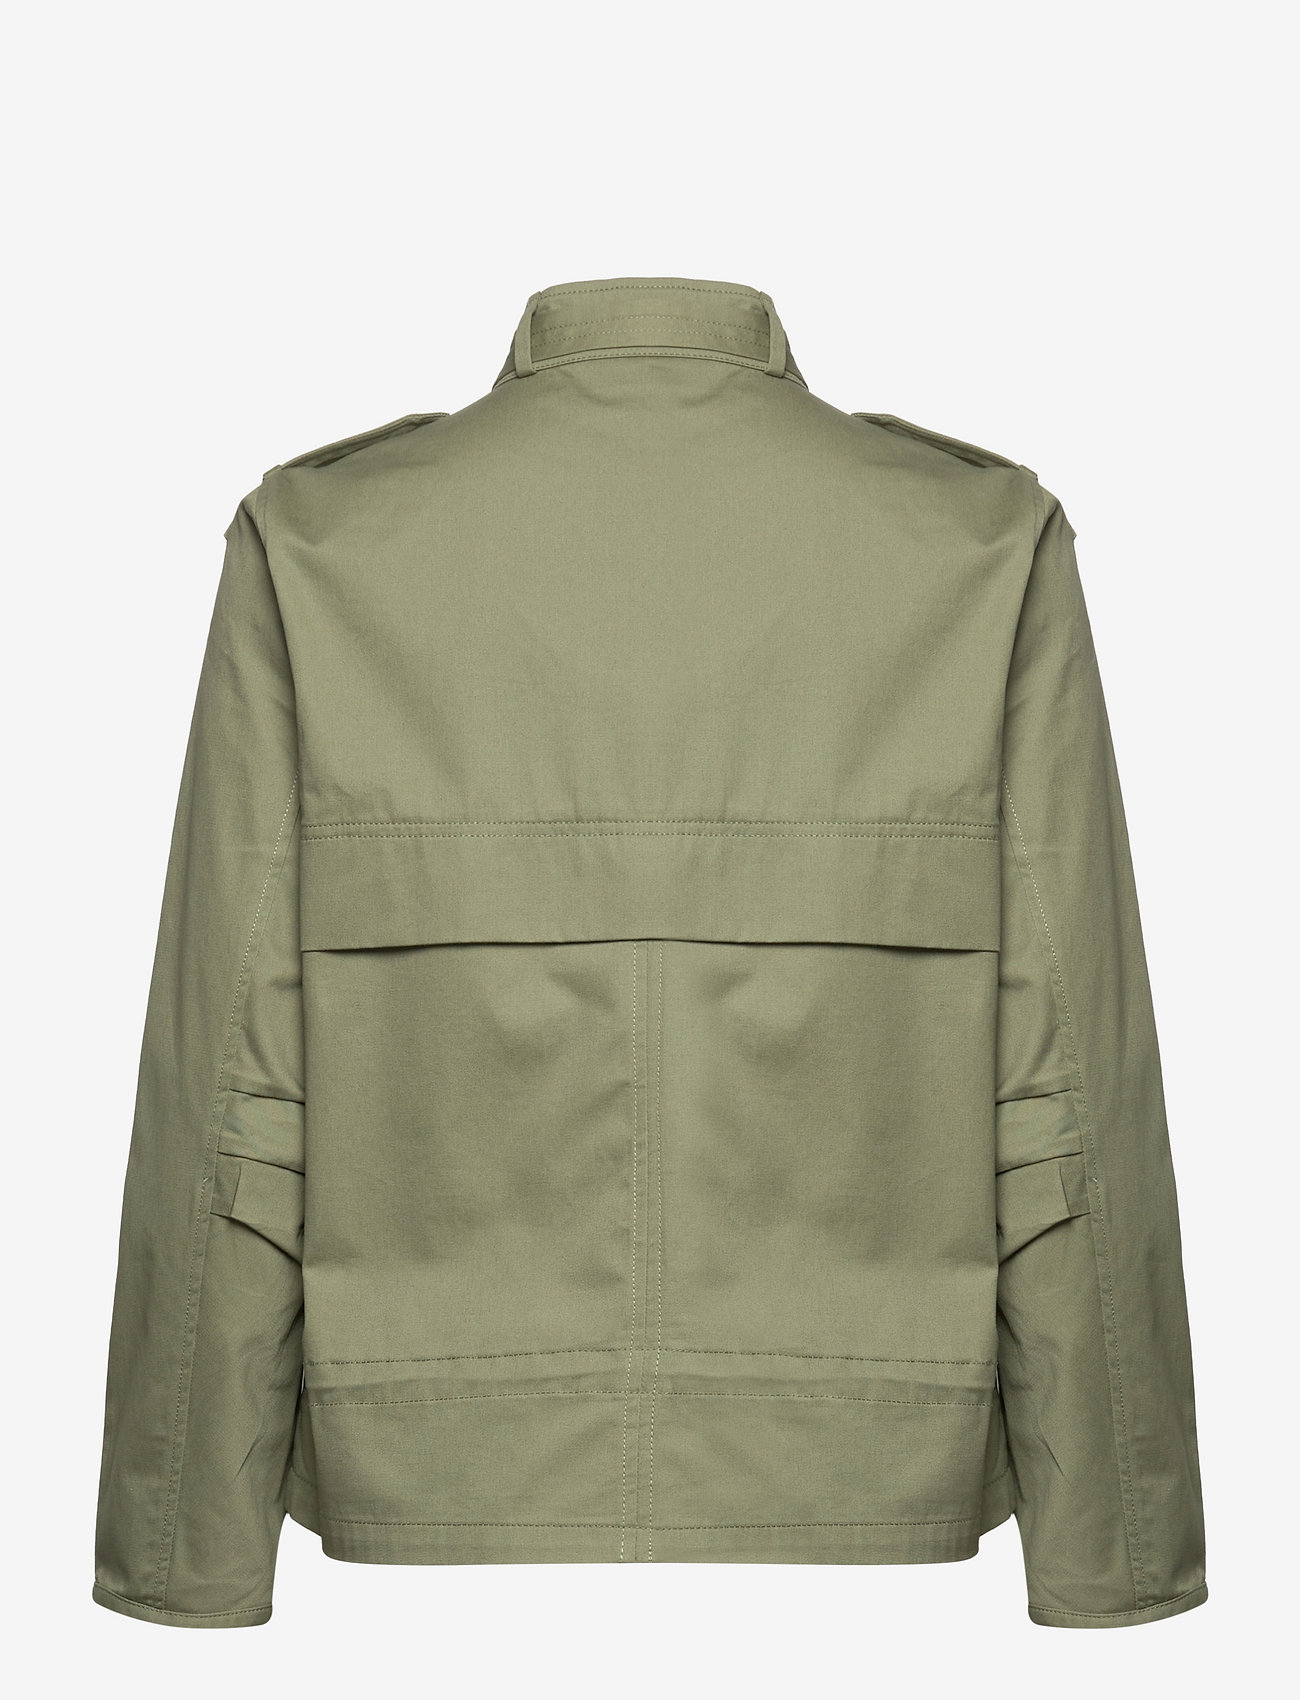 Esprit Casual - Outdoor jacket - utility jackets - light khaki - 1